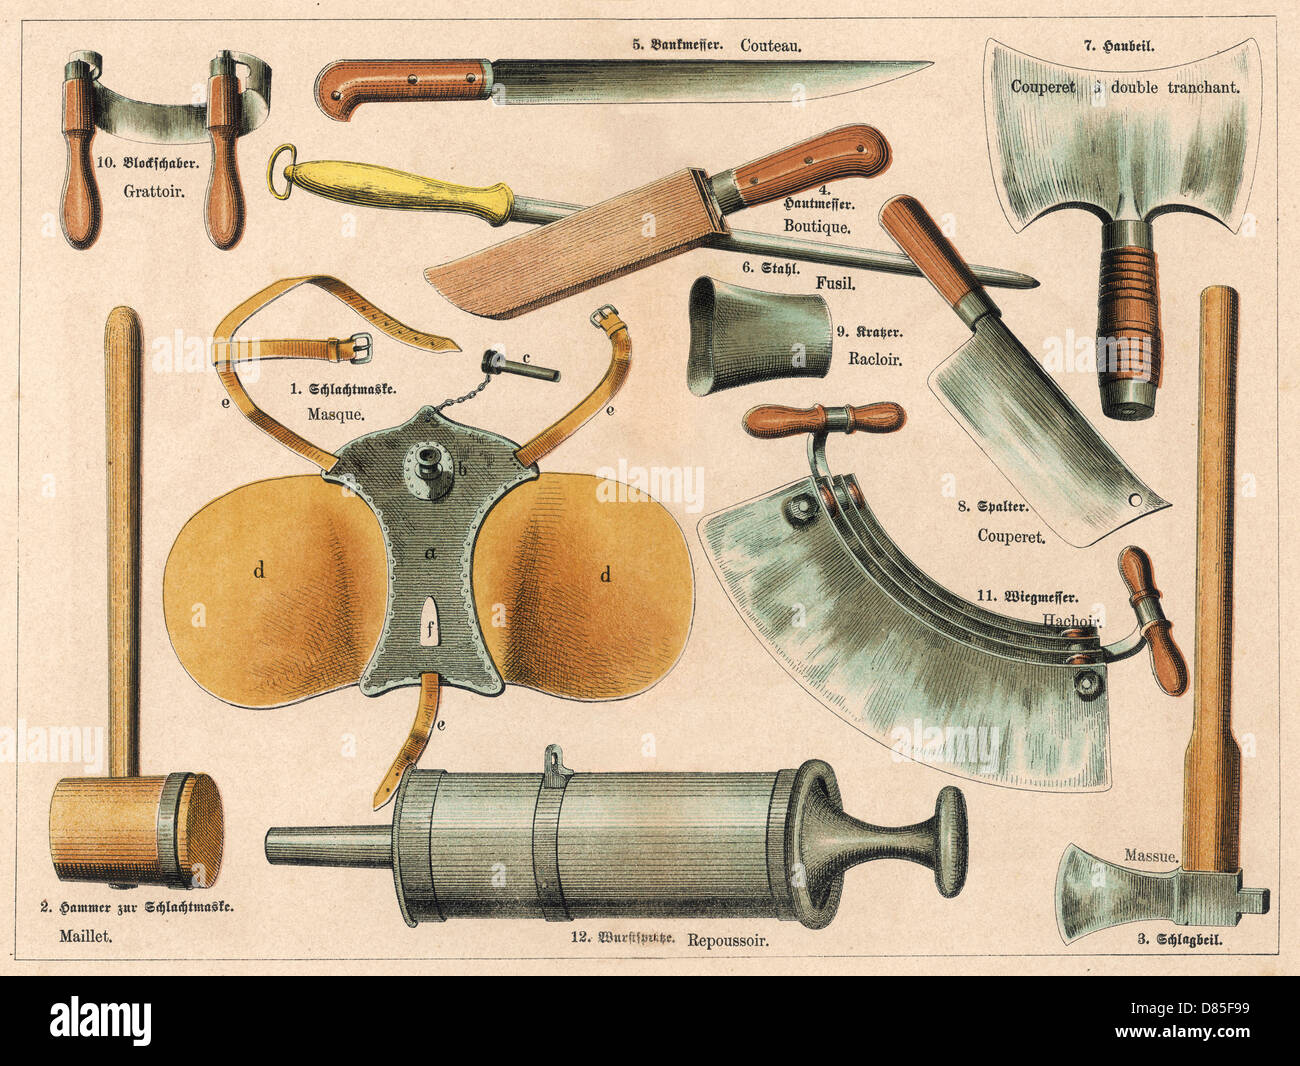 Various butchery tools Stock Photo - Alamy